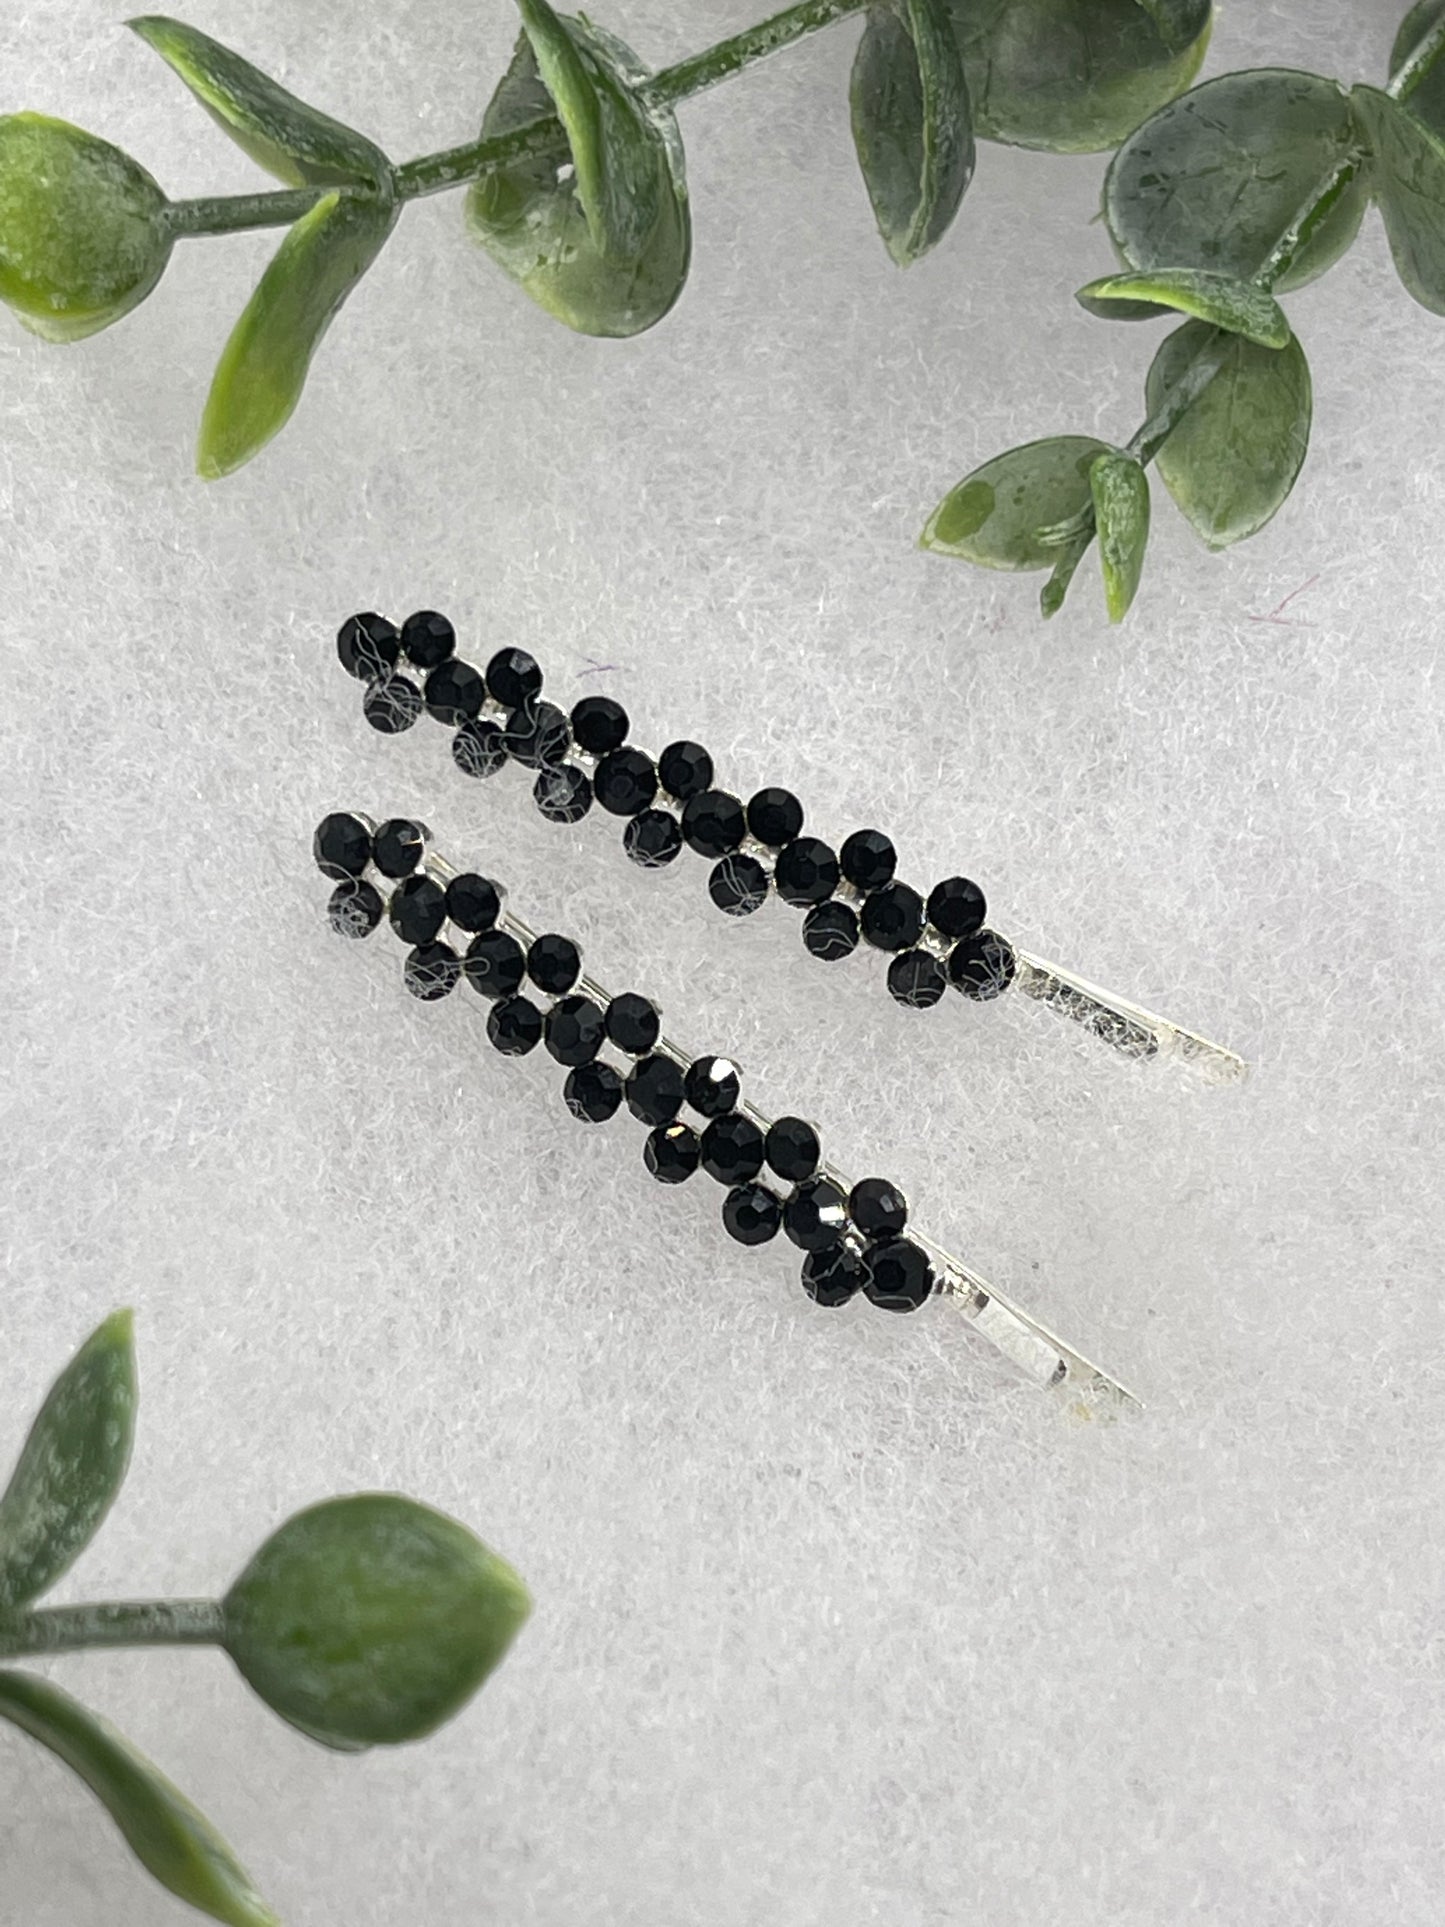 Black Crystal Rhinestone Bobby pin hair pins set approximately 2.0”  silver tone formal hair accessory gift wedding bridal Hair accessory